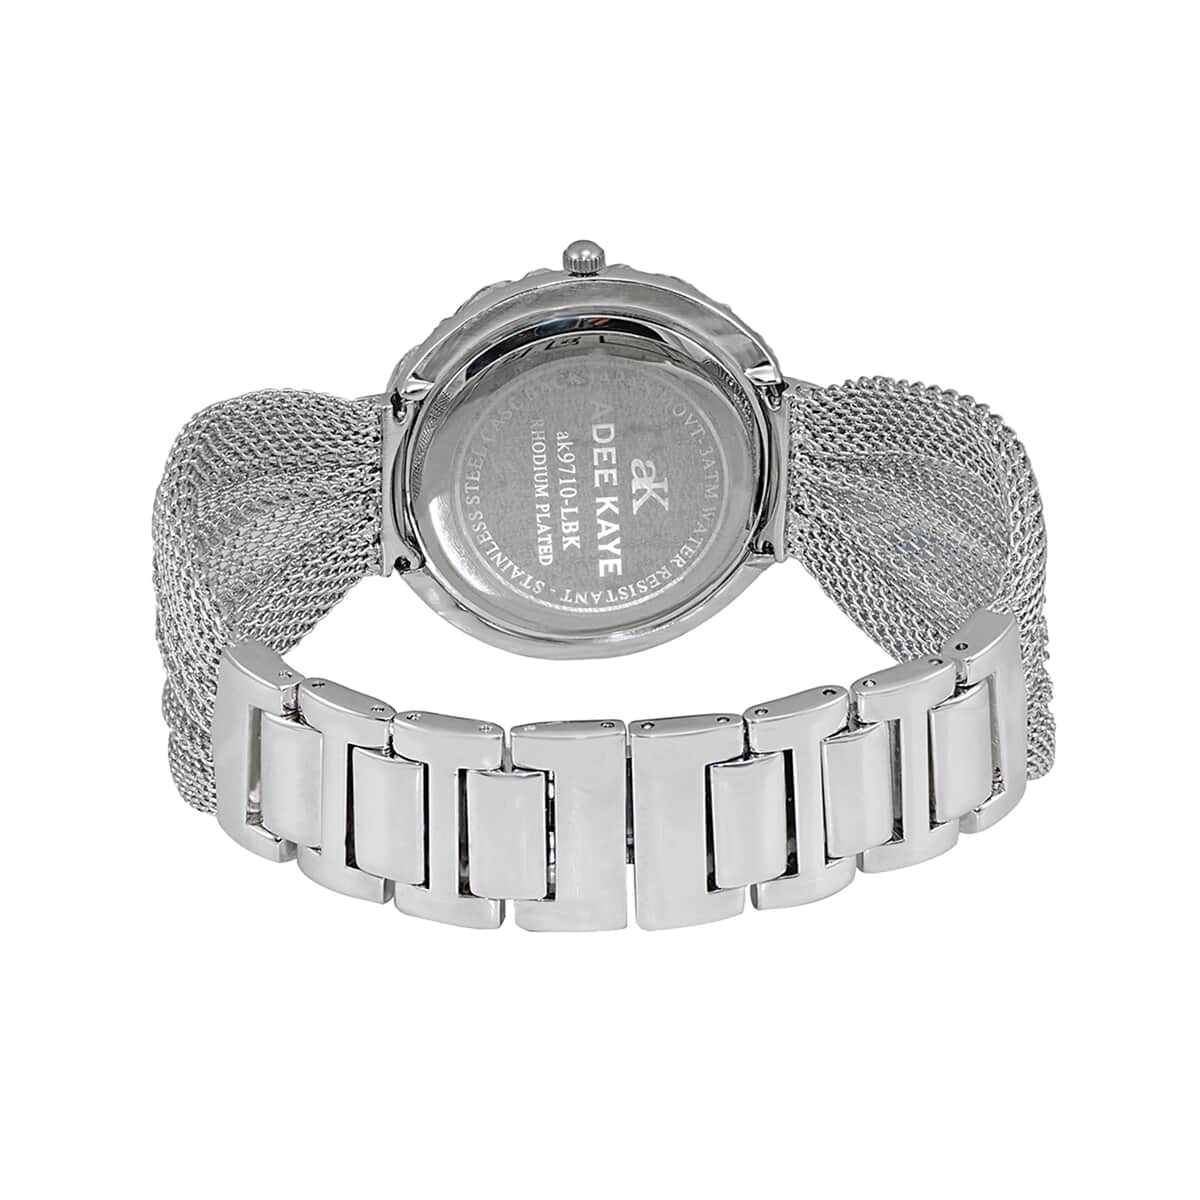 ADEE KAYE Austrian Crystal Japan Quartz Movement Black Dial Watch in Silvertone Strap (40.9 mm) | Women's Designer Watch | Analog Luxury Wristwatch image number 2